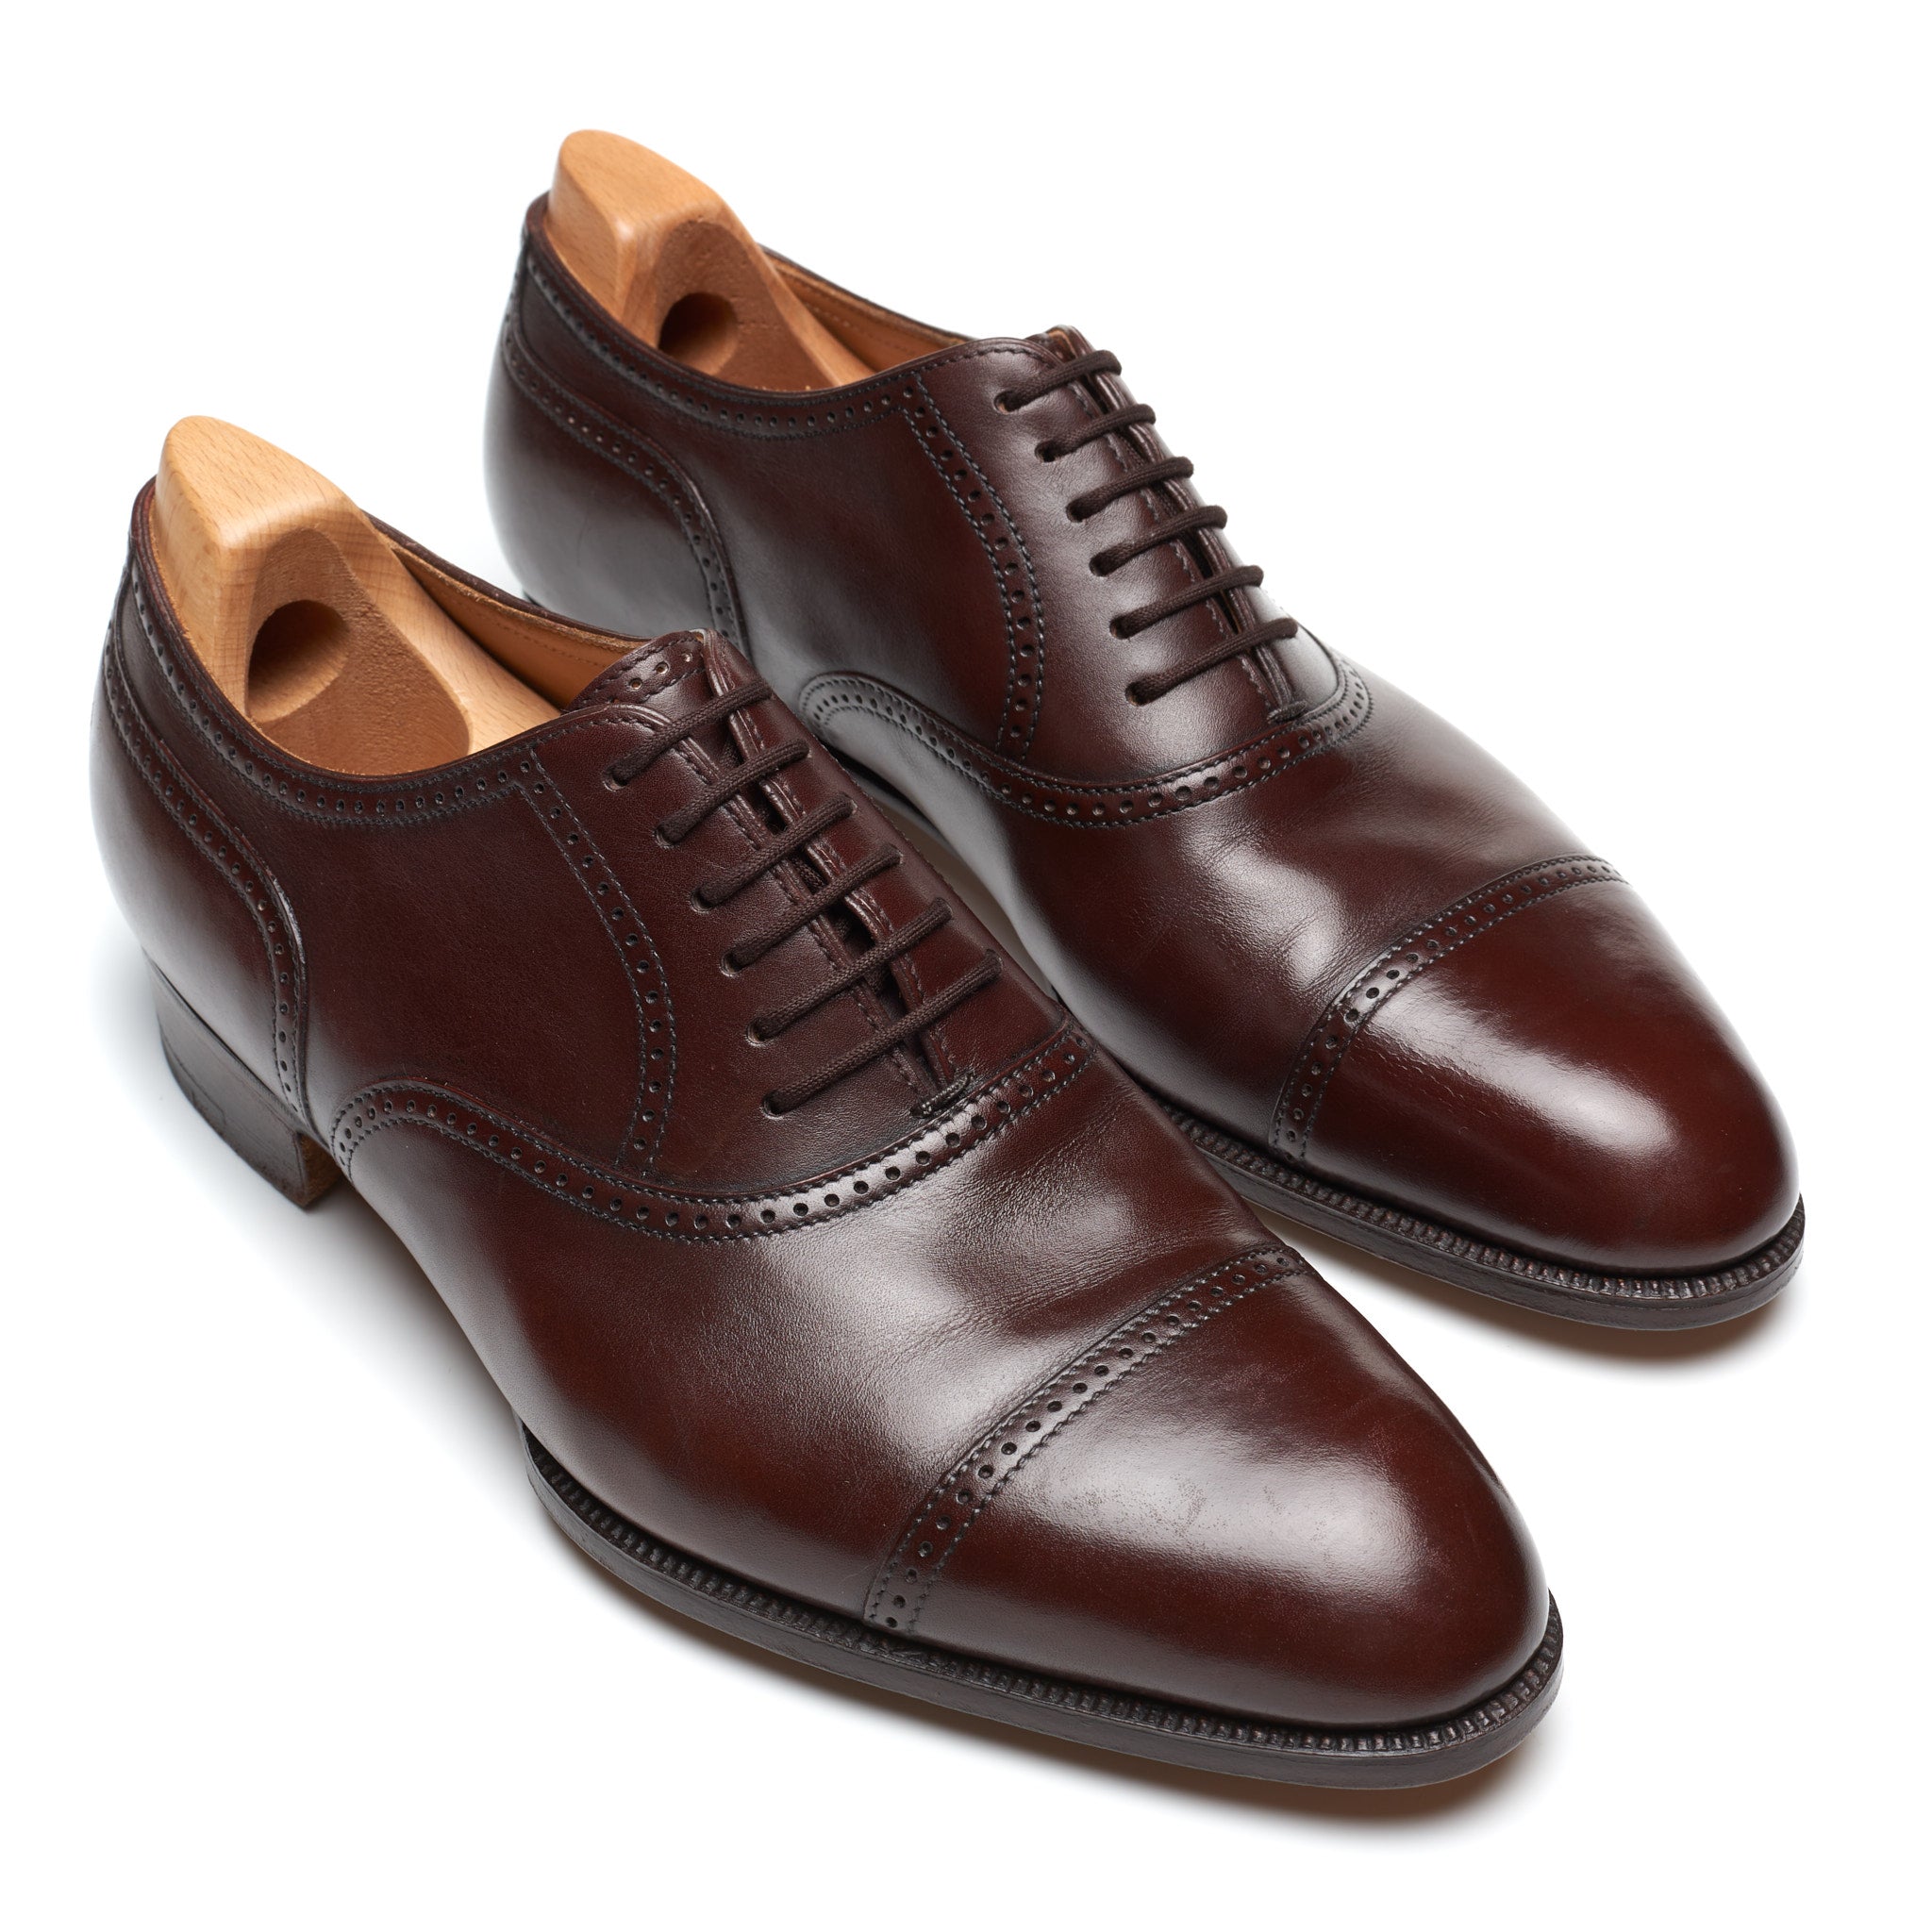 JOHN LOBB Paris Bespoke Brown Calf Leather Brogue Oxford Shoes UK 7.5 US 8.5 JOHN LOBB